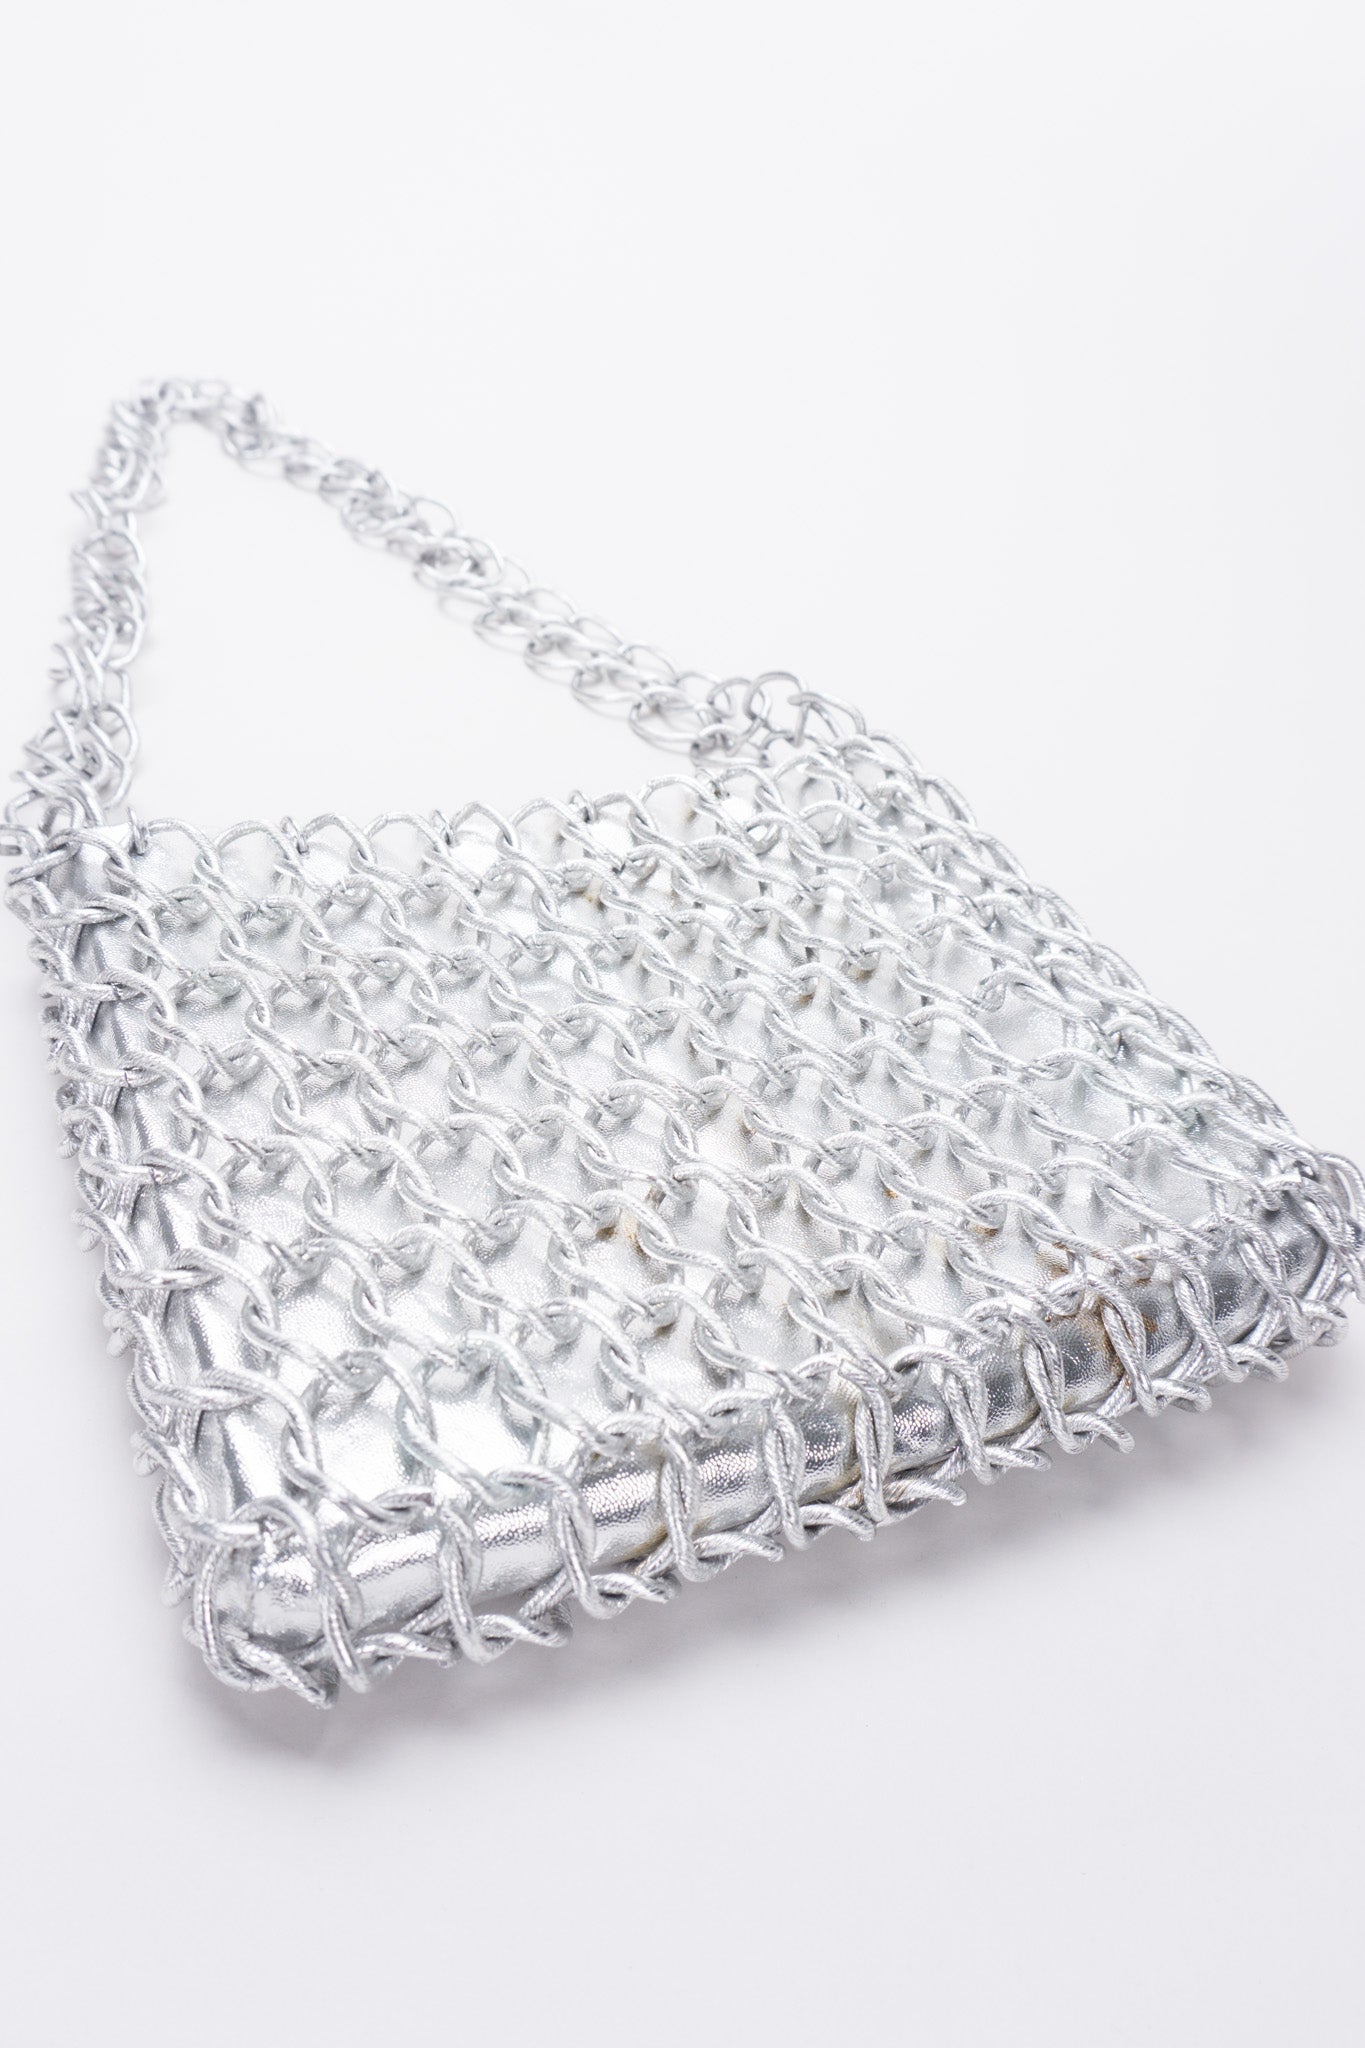 Walborg Silver Metal Link Bag Inspired by Paco Rabanne